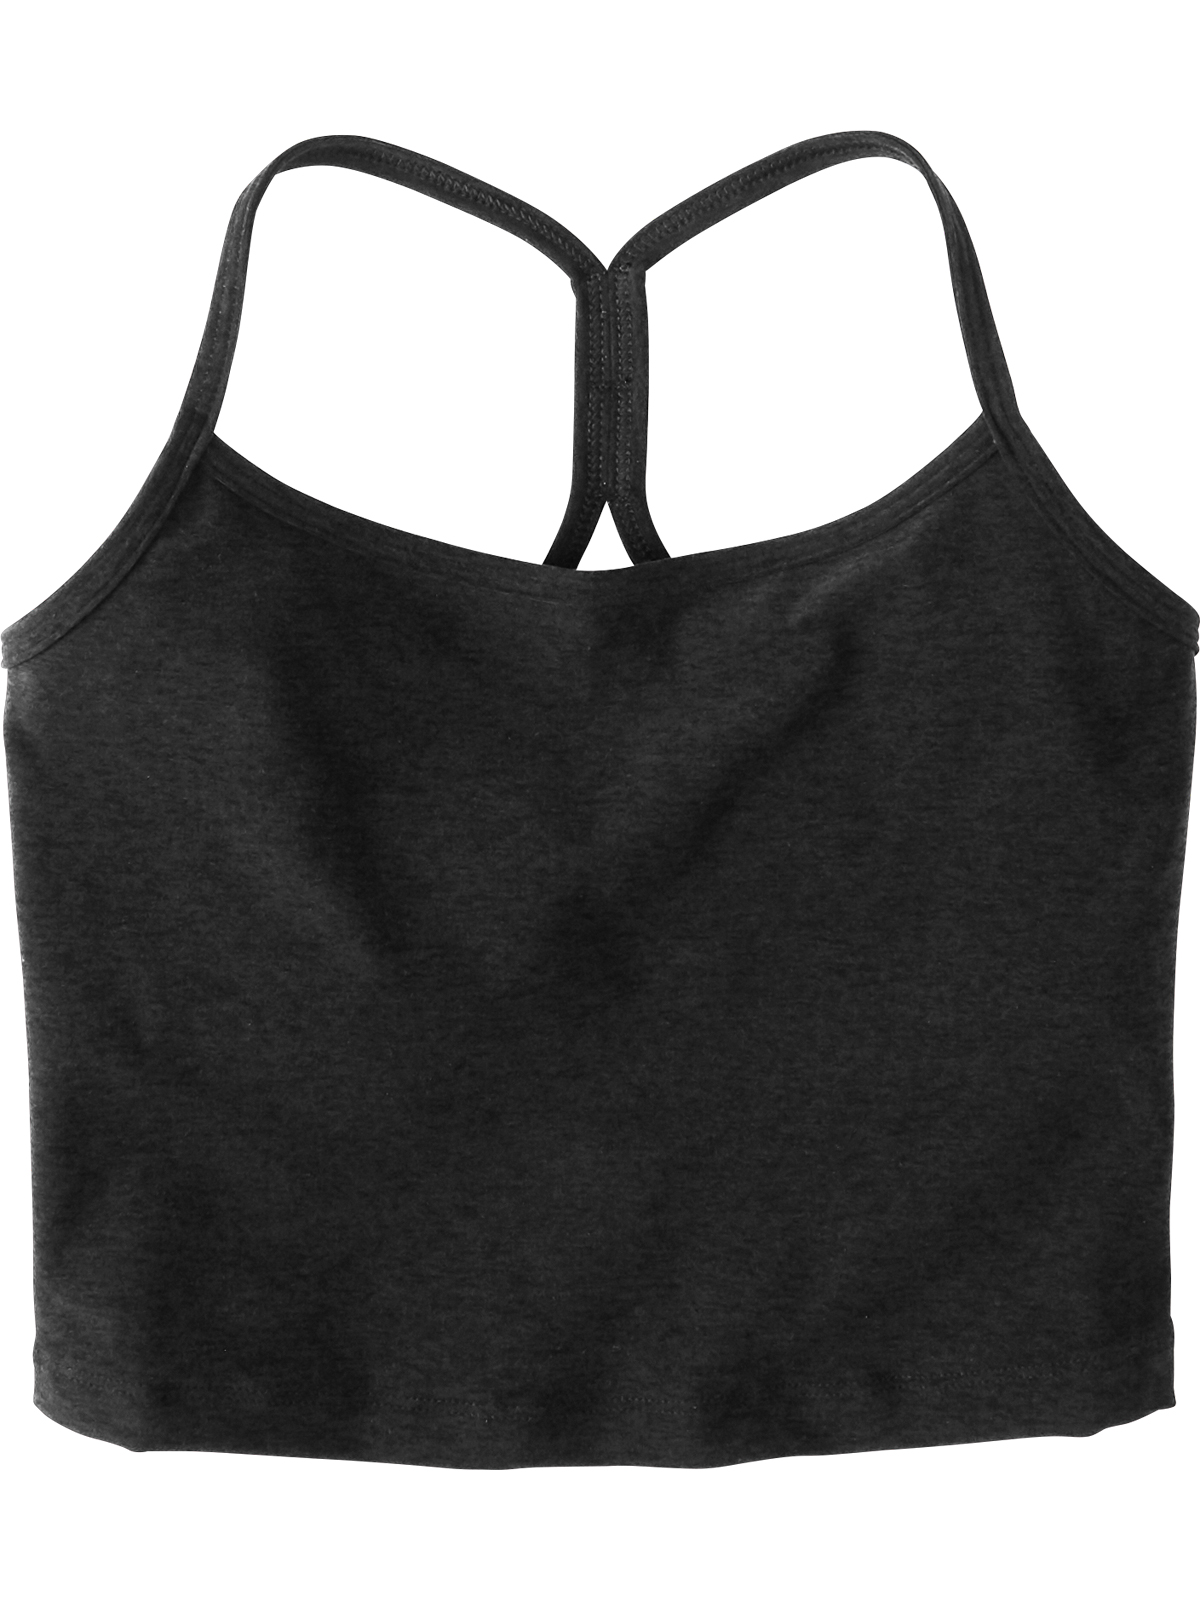 Buy GITGRNTH Comfy Cami Bra for Women Crop Top Yoga Bralette